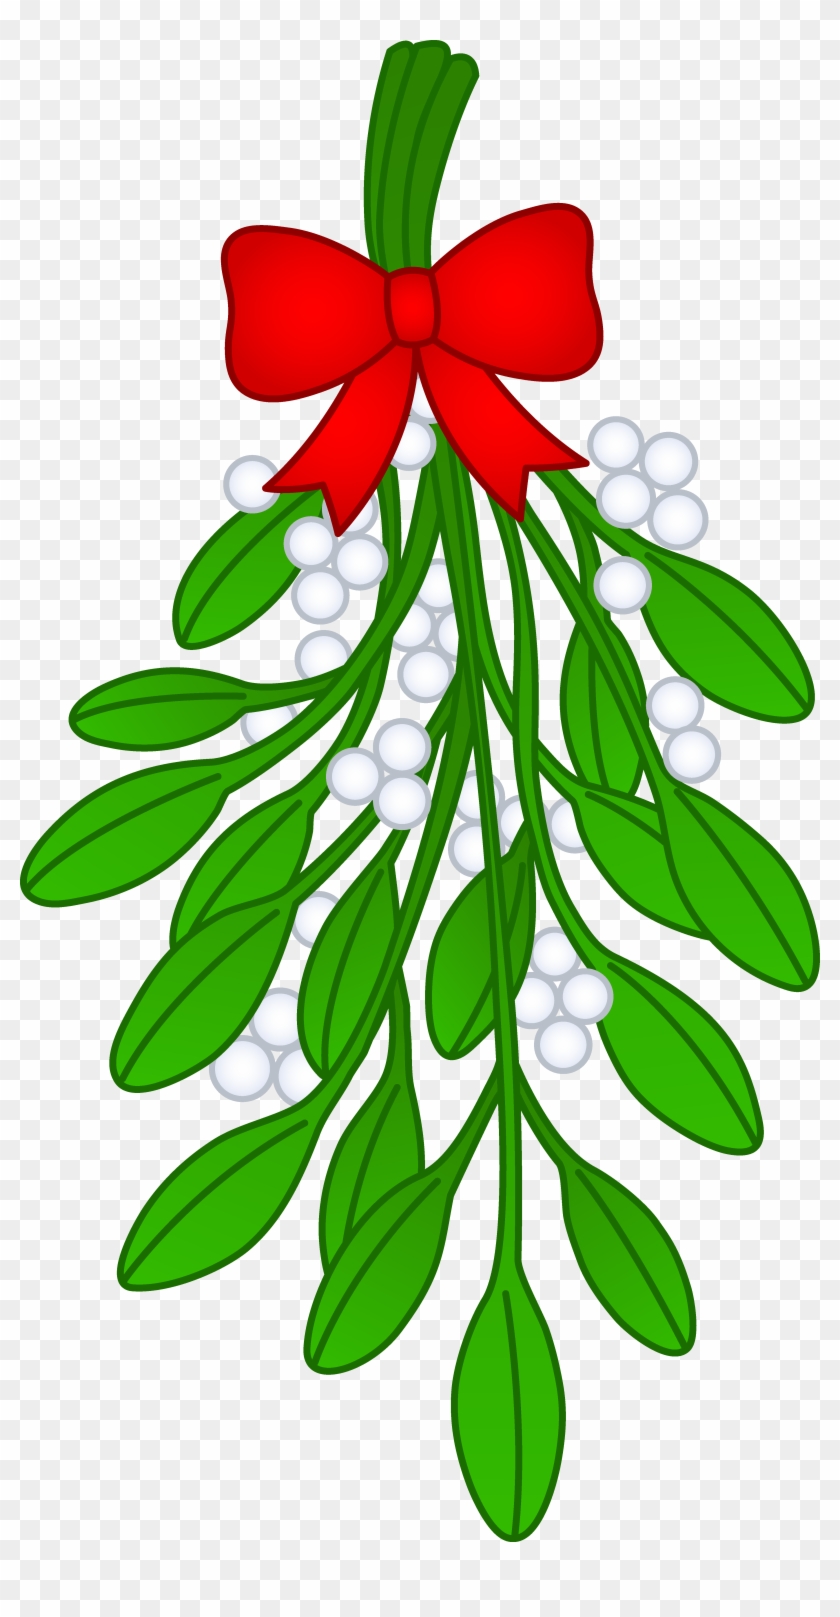 Christmas Mistletoe With Red Bow Free Clip Art - Mistletoe Clipart #234609